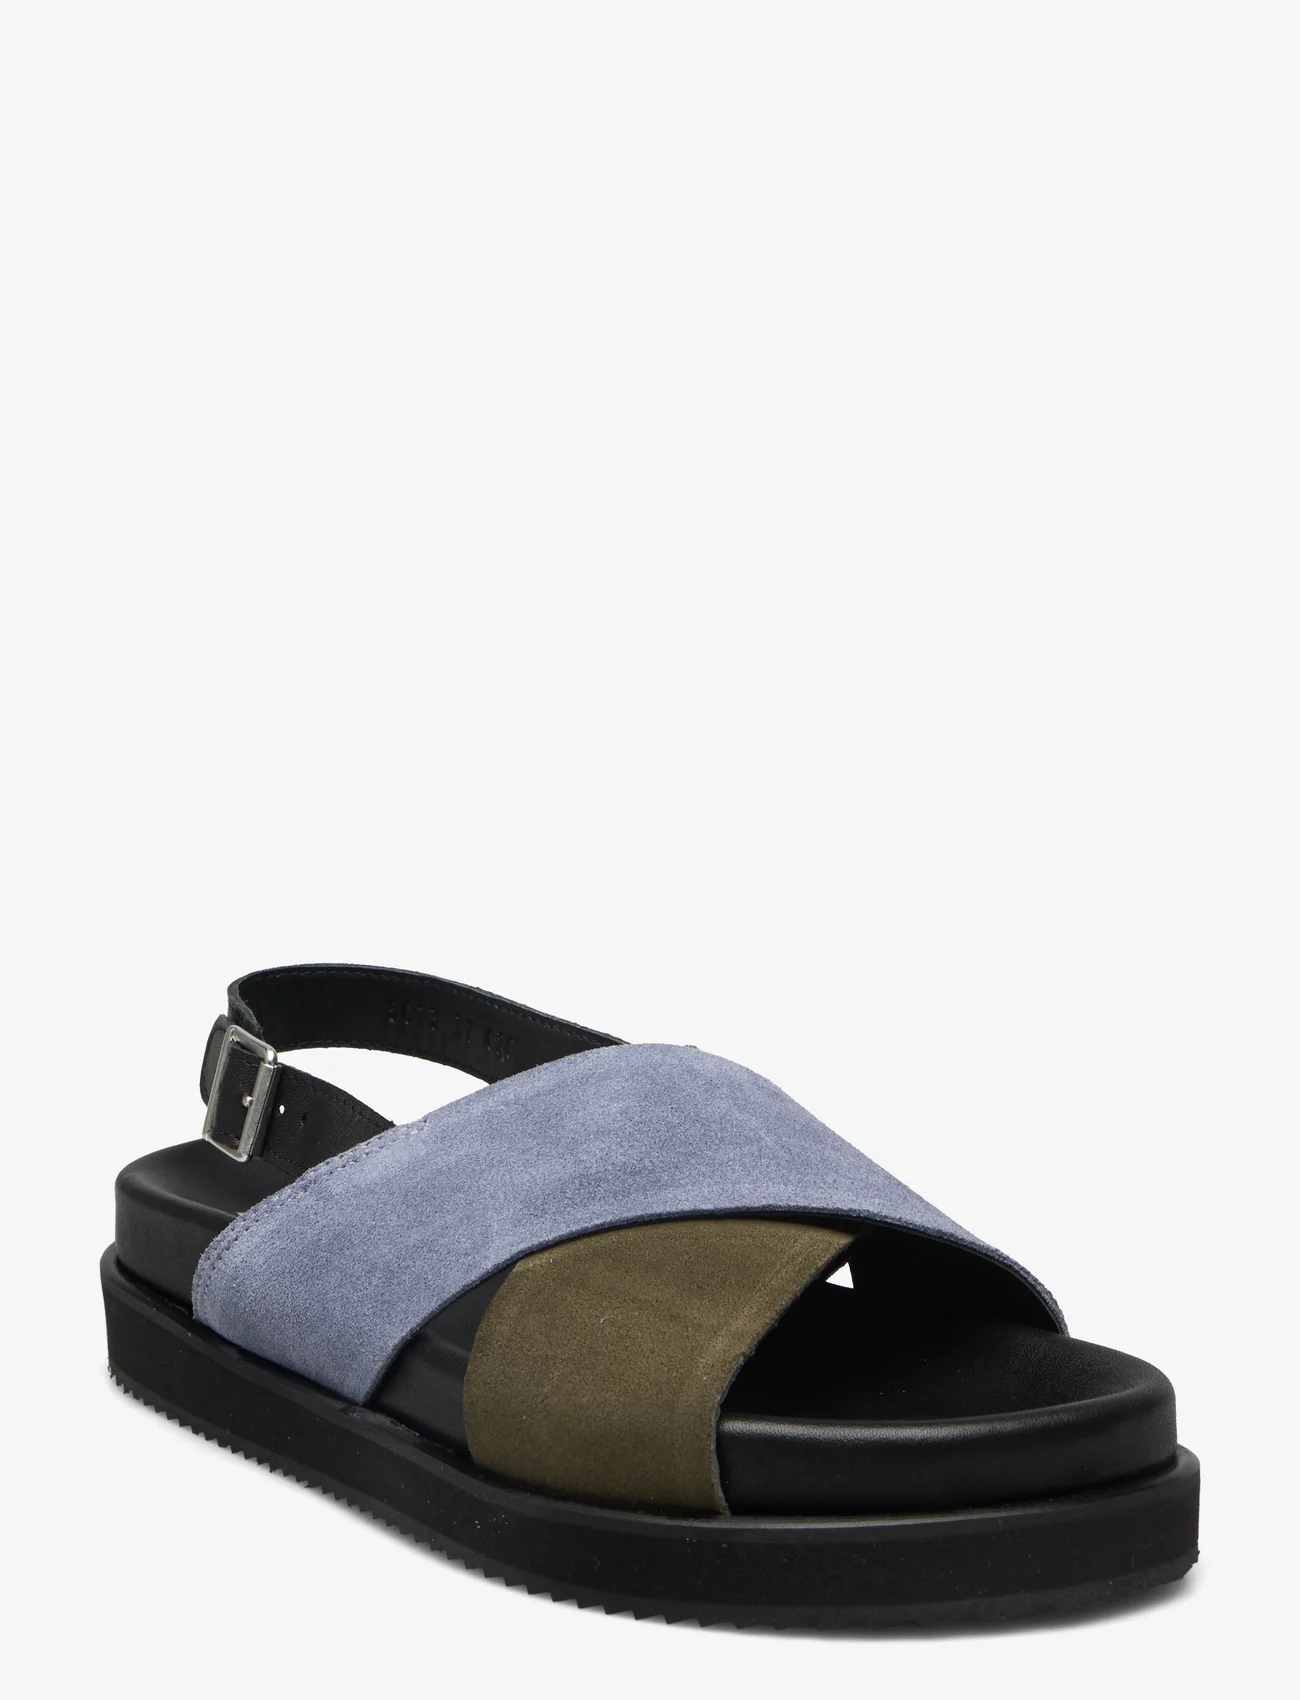 ANGULUS - Sandals - flat - open toe - op - platte sandalen - 1604/2244/2242 black/green/lig - 0